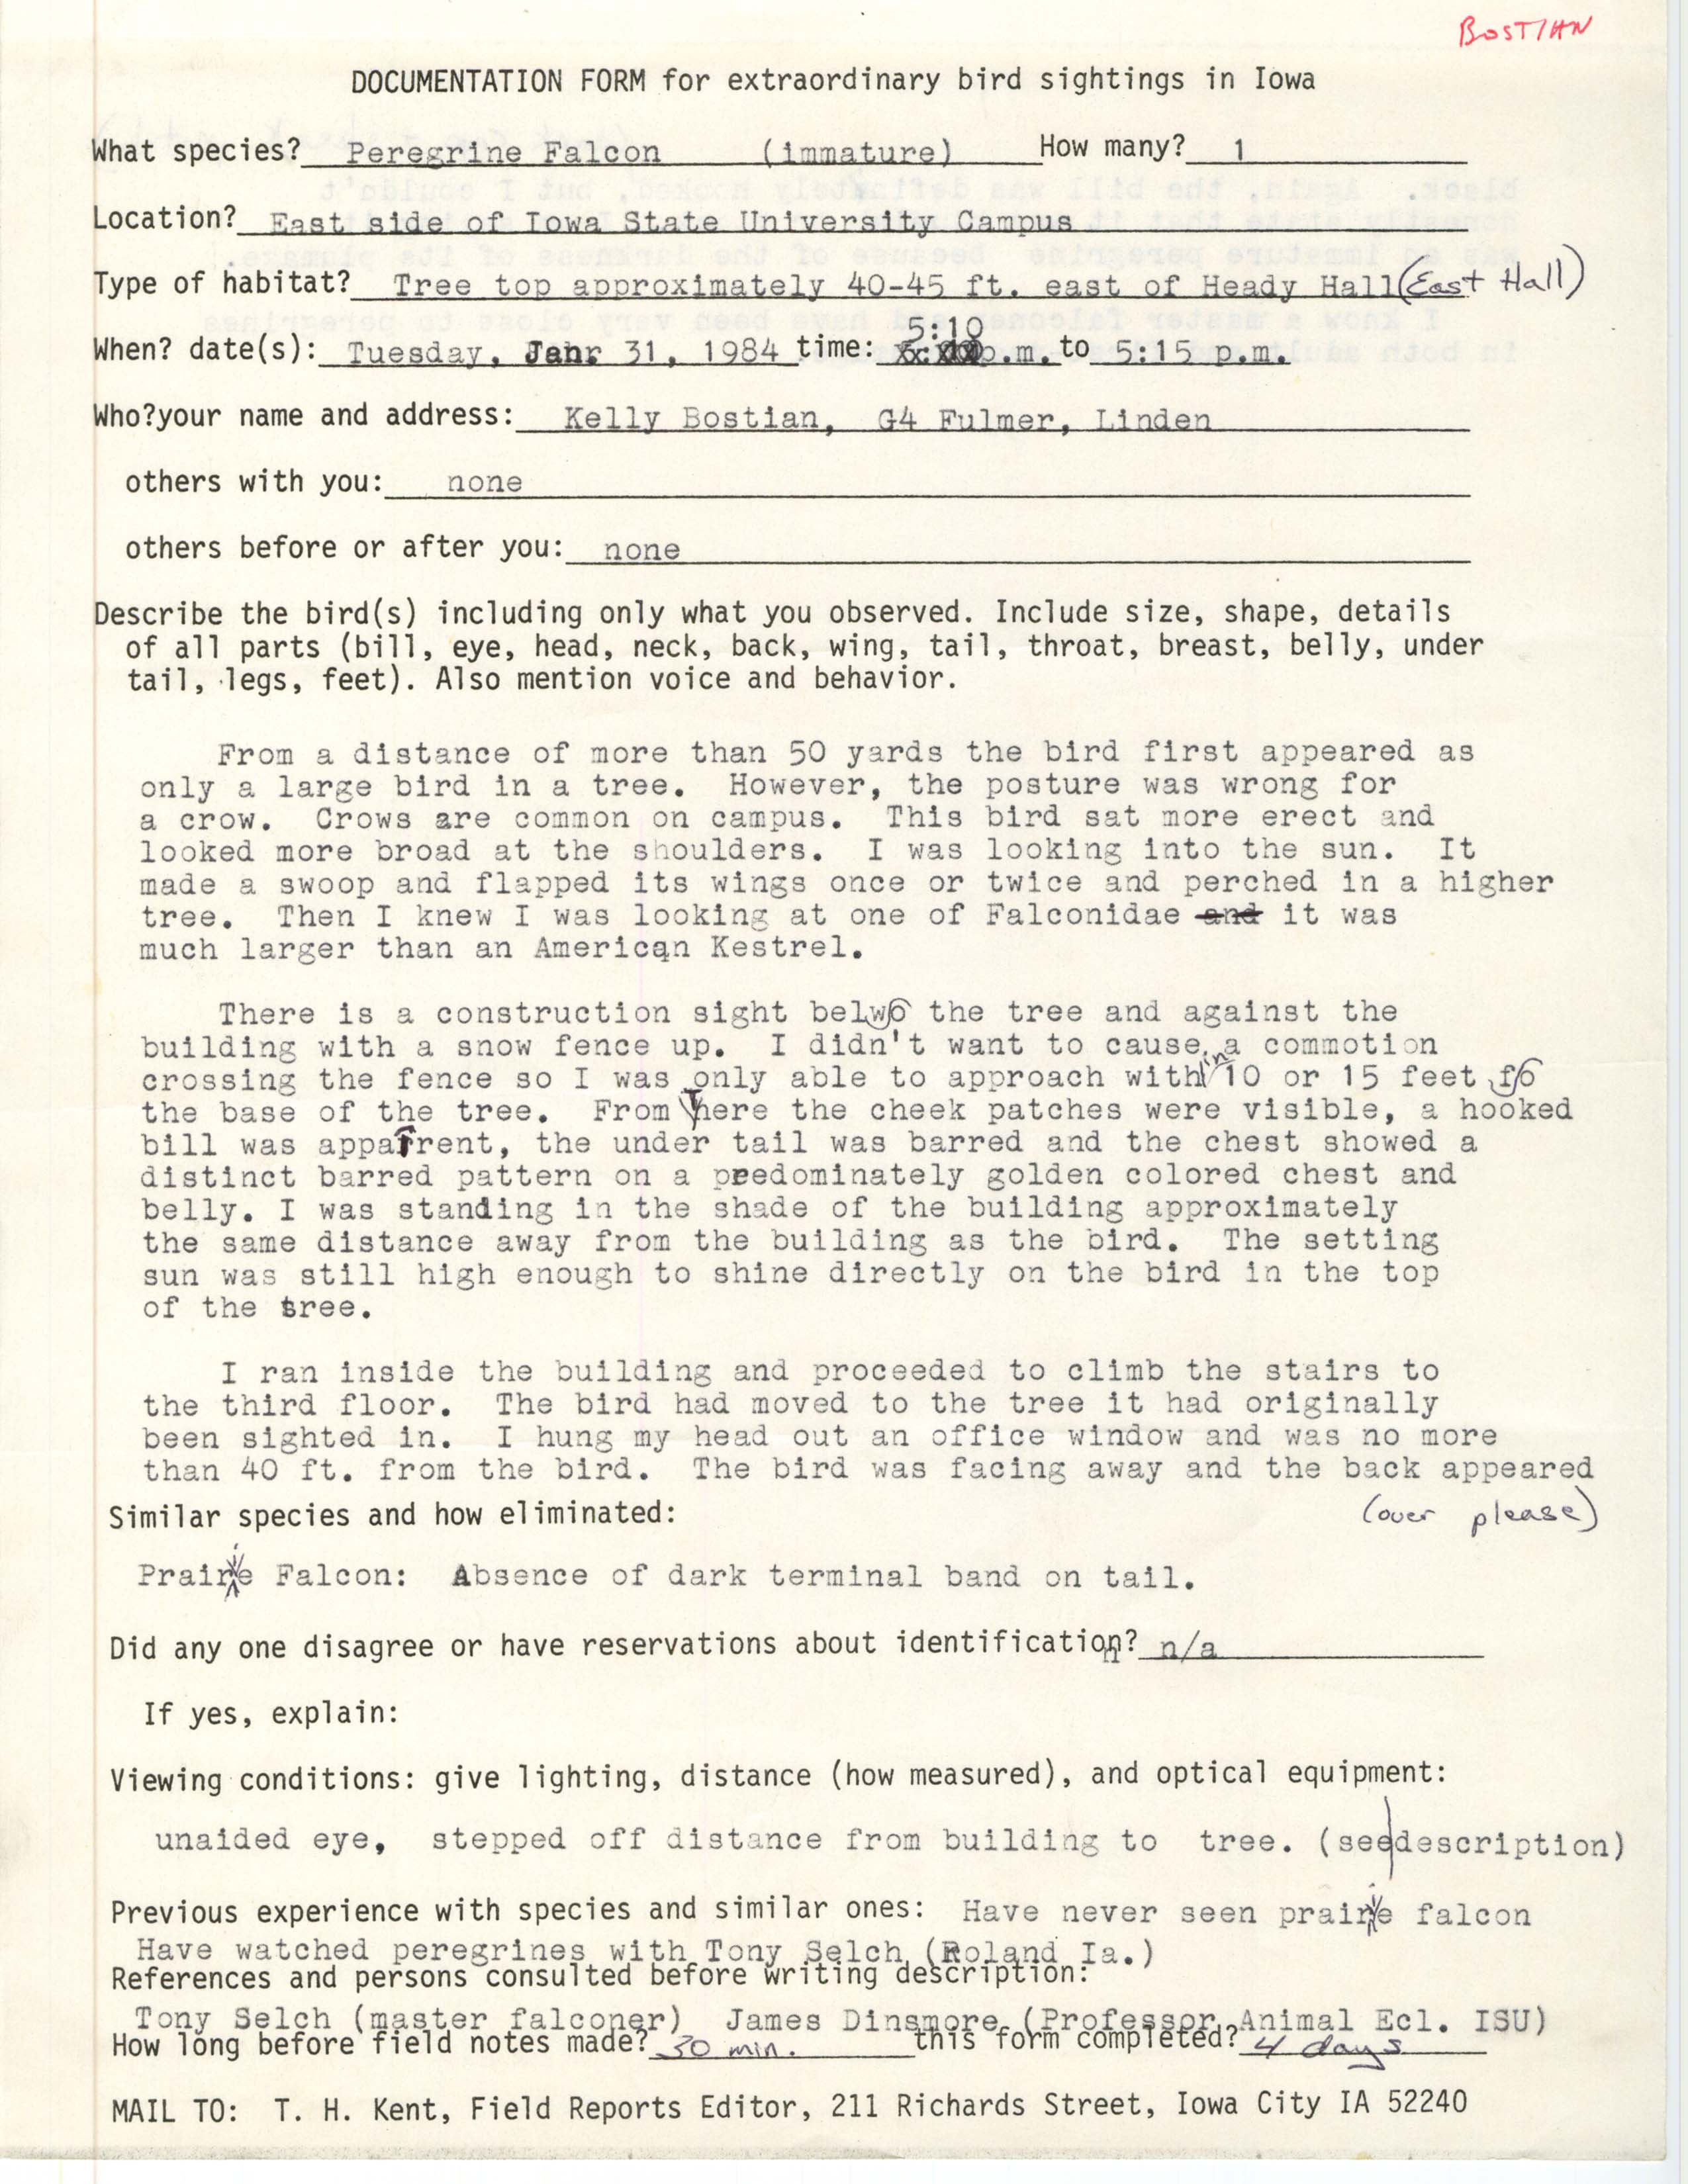 Rare bird documentation form for Peregrine Falcon at  Heady Hall at Iowa State University, 1984